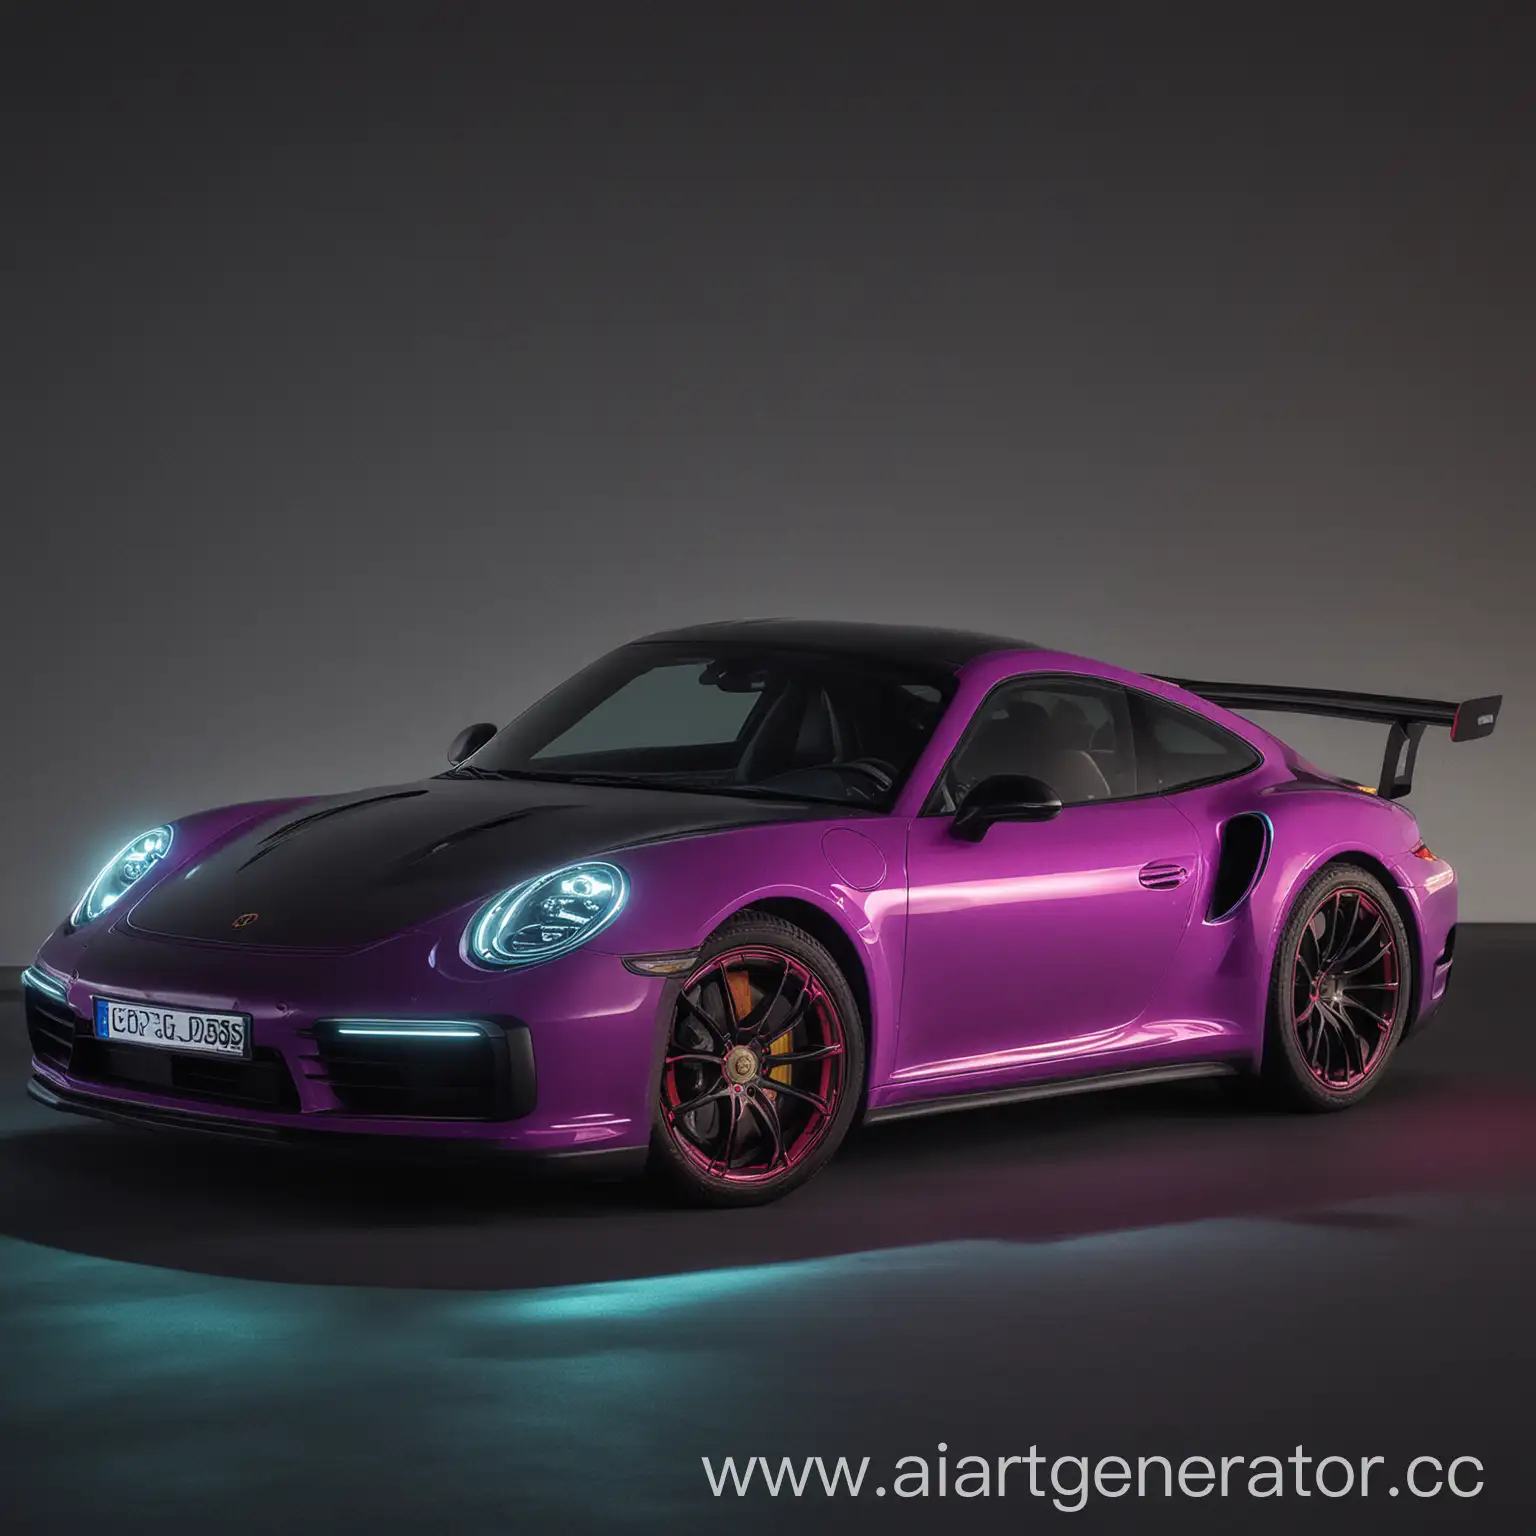 Neon-Porsche-911-Turbo-S-Speeding-Through-City-Streets-at-Night